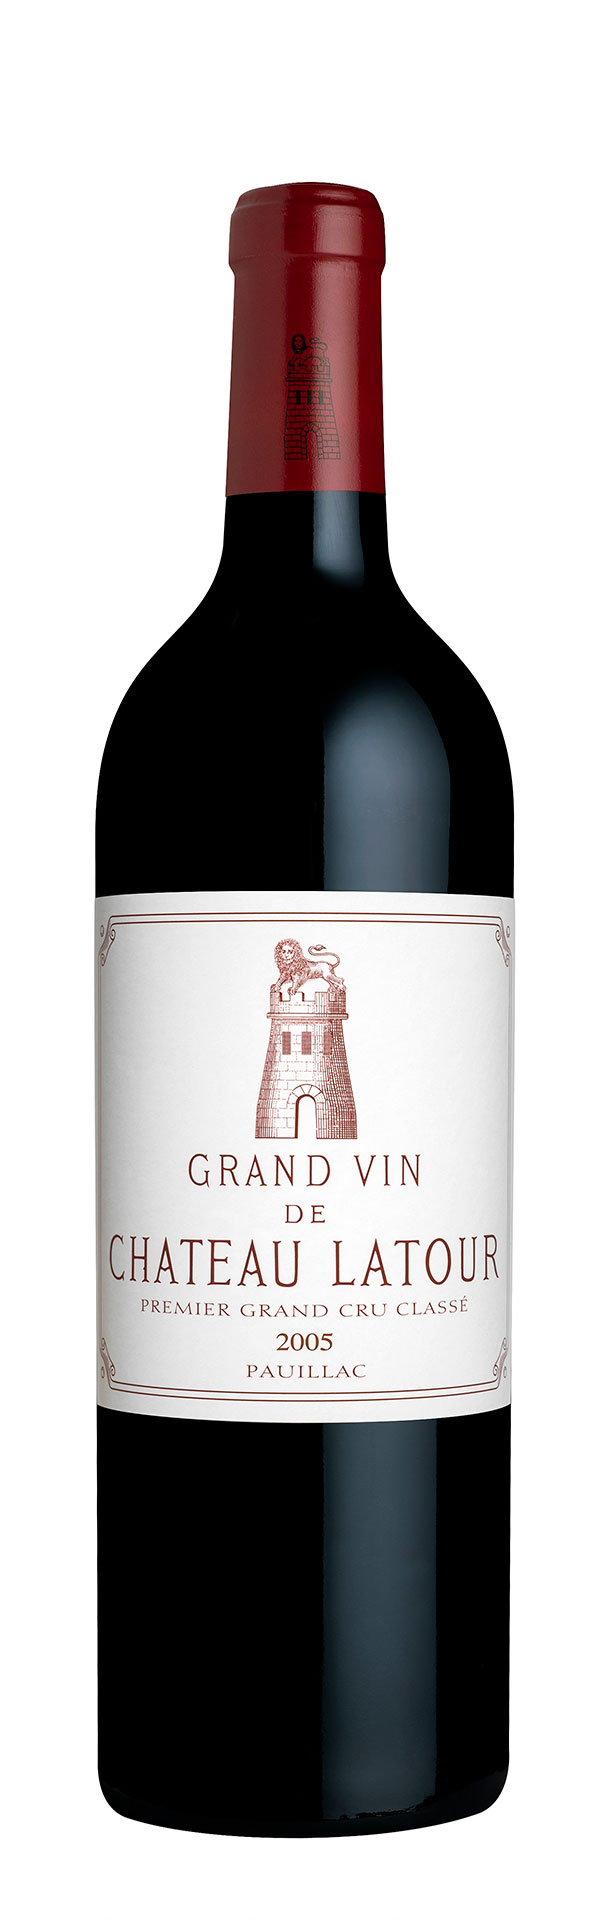 2005 Chateau Latour Grand Vin